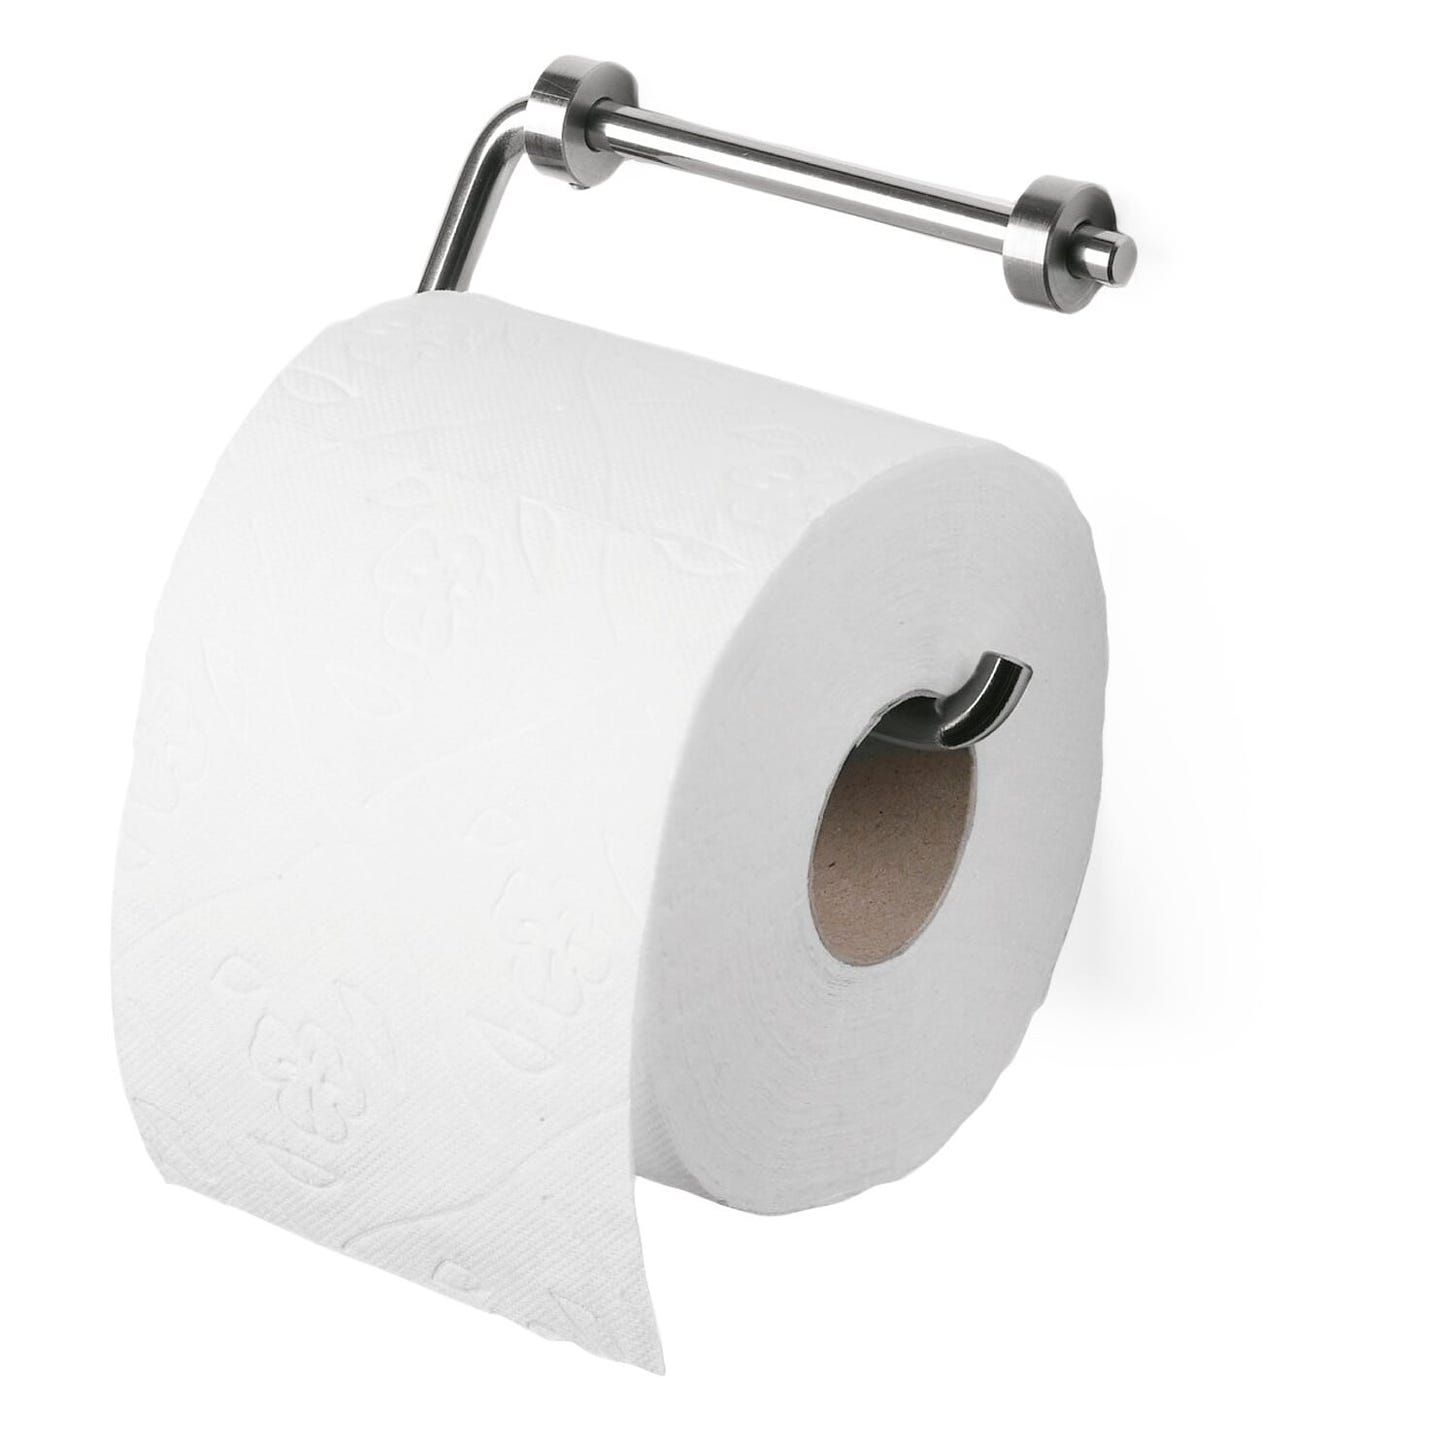 Stainless steel toilet paper holder | Manufactum